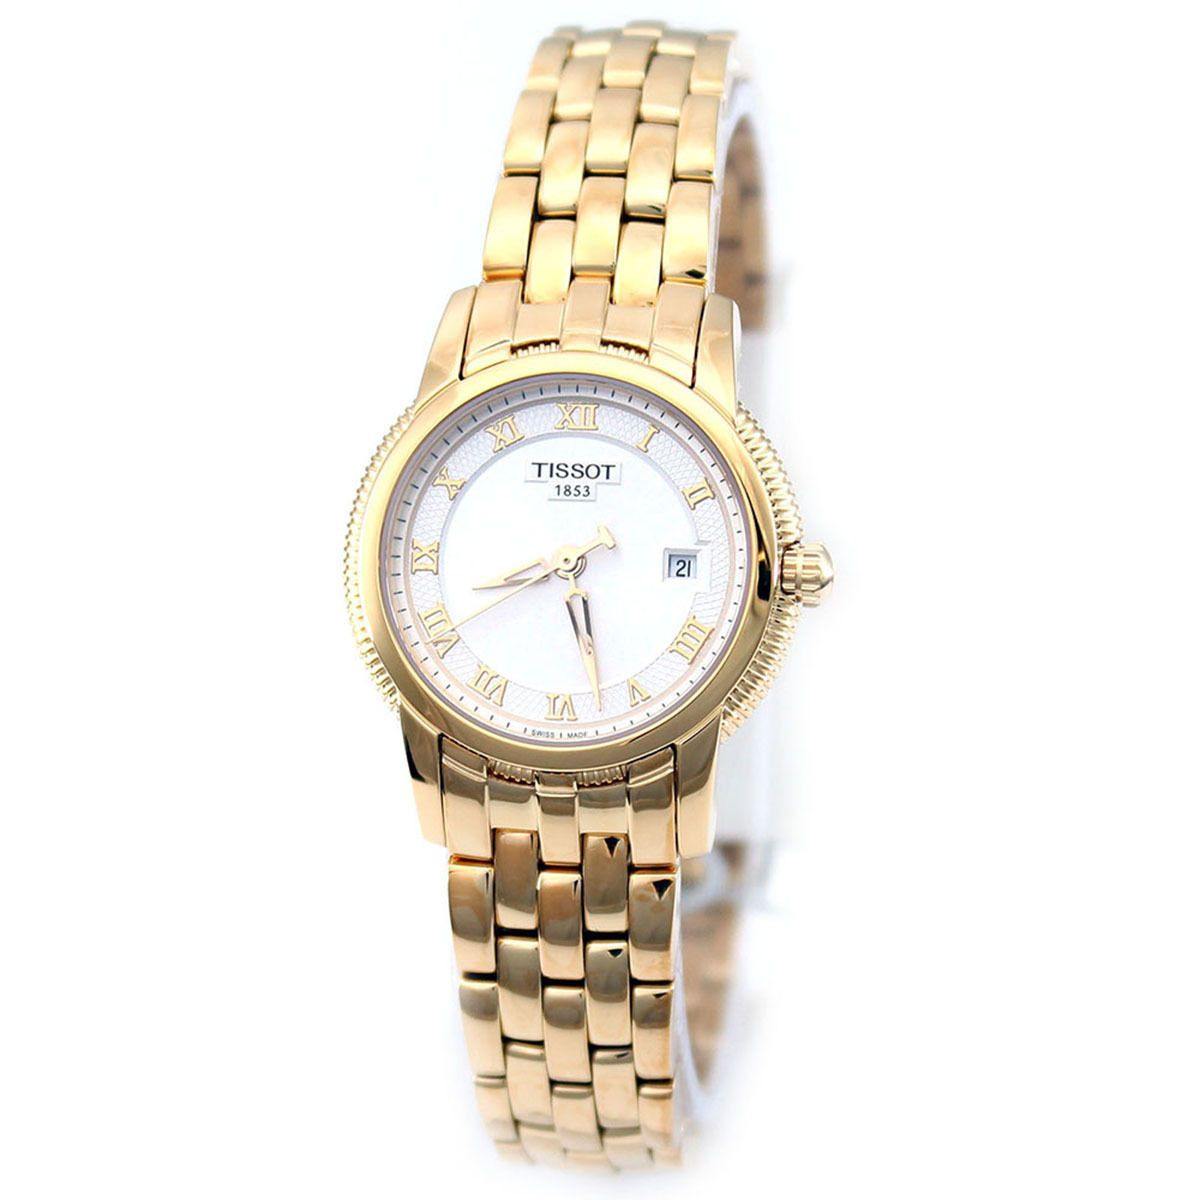 Tissot Swiss Made T-Classic Ballade III Gold Plated Ladies' Watch T0312103303300 - Prestige